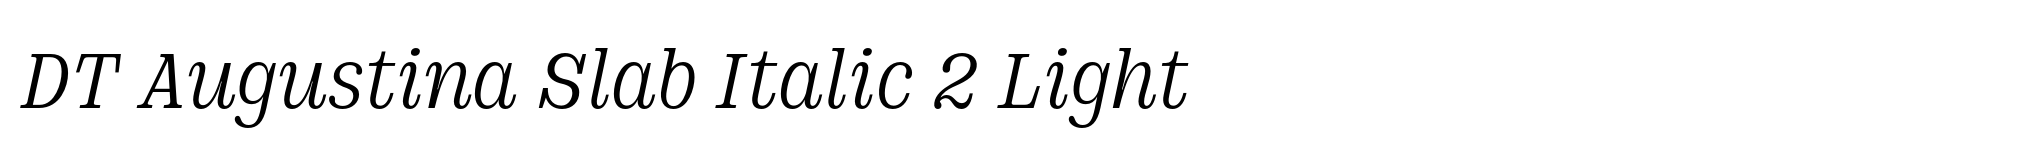 DT Augustina Slab Italic 2 Light image